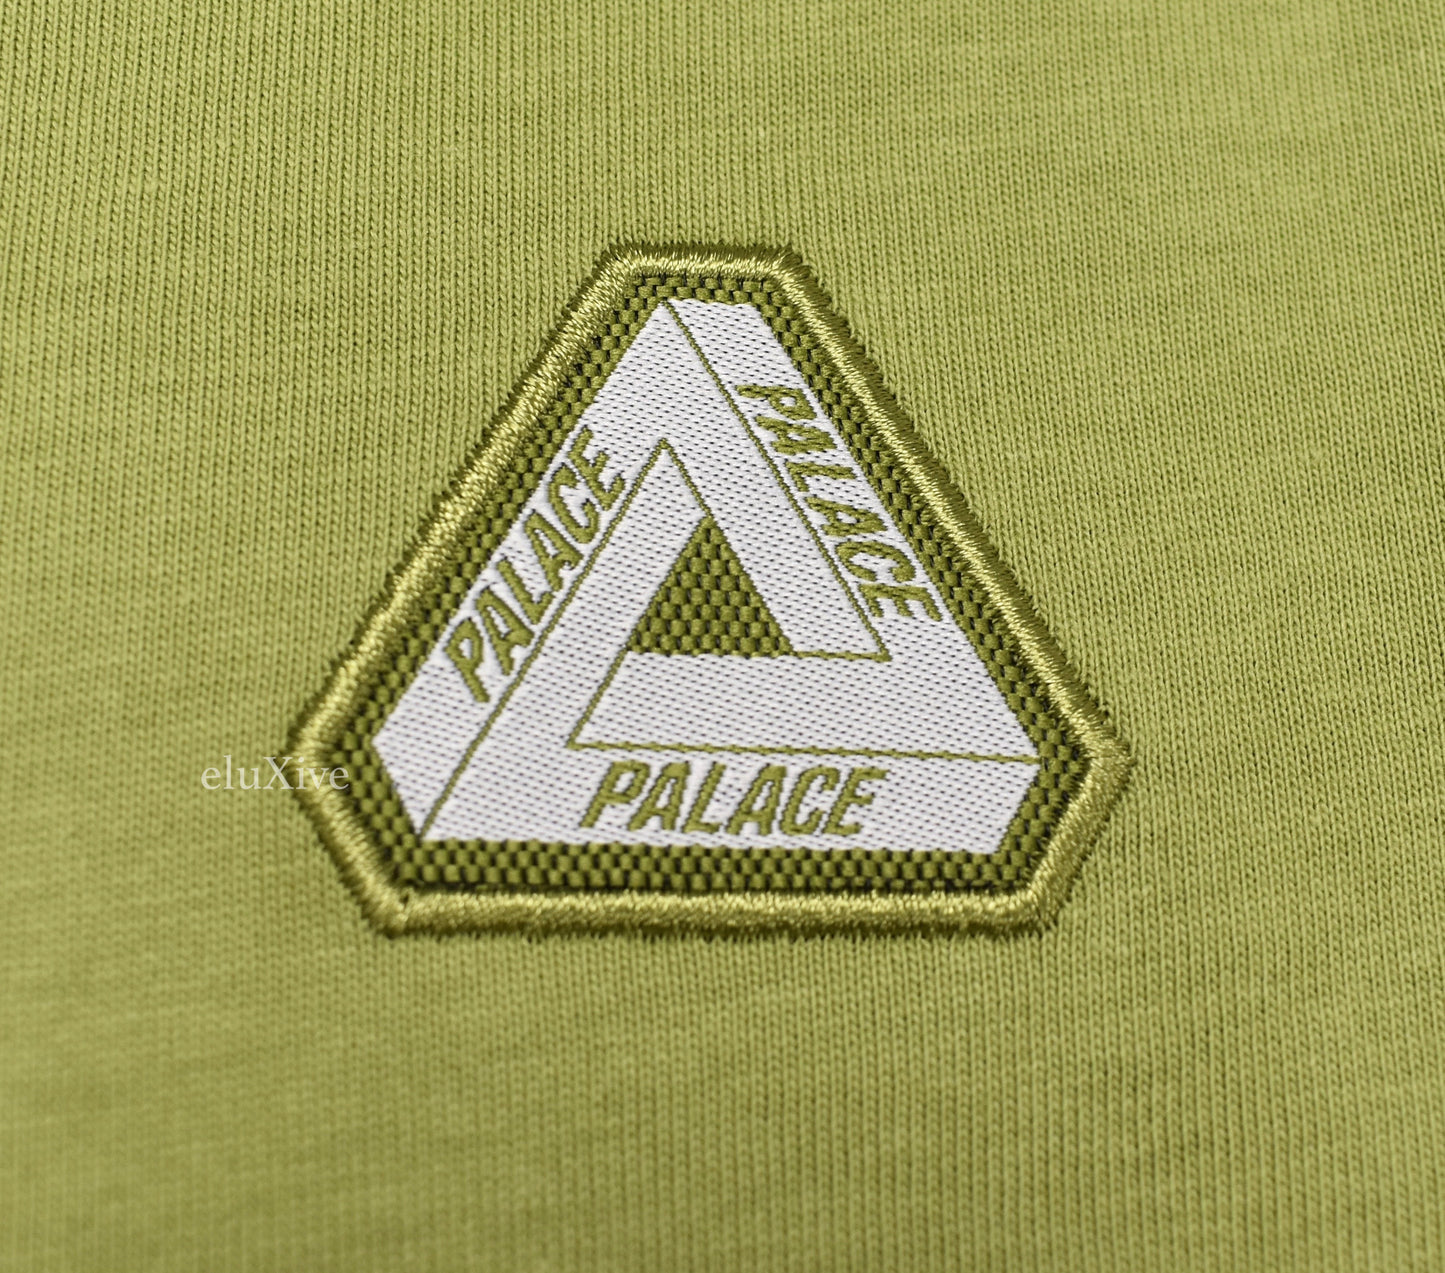 Palace - Sofar Tri-ferg Logo T-Shirt (Moss Green)